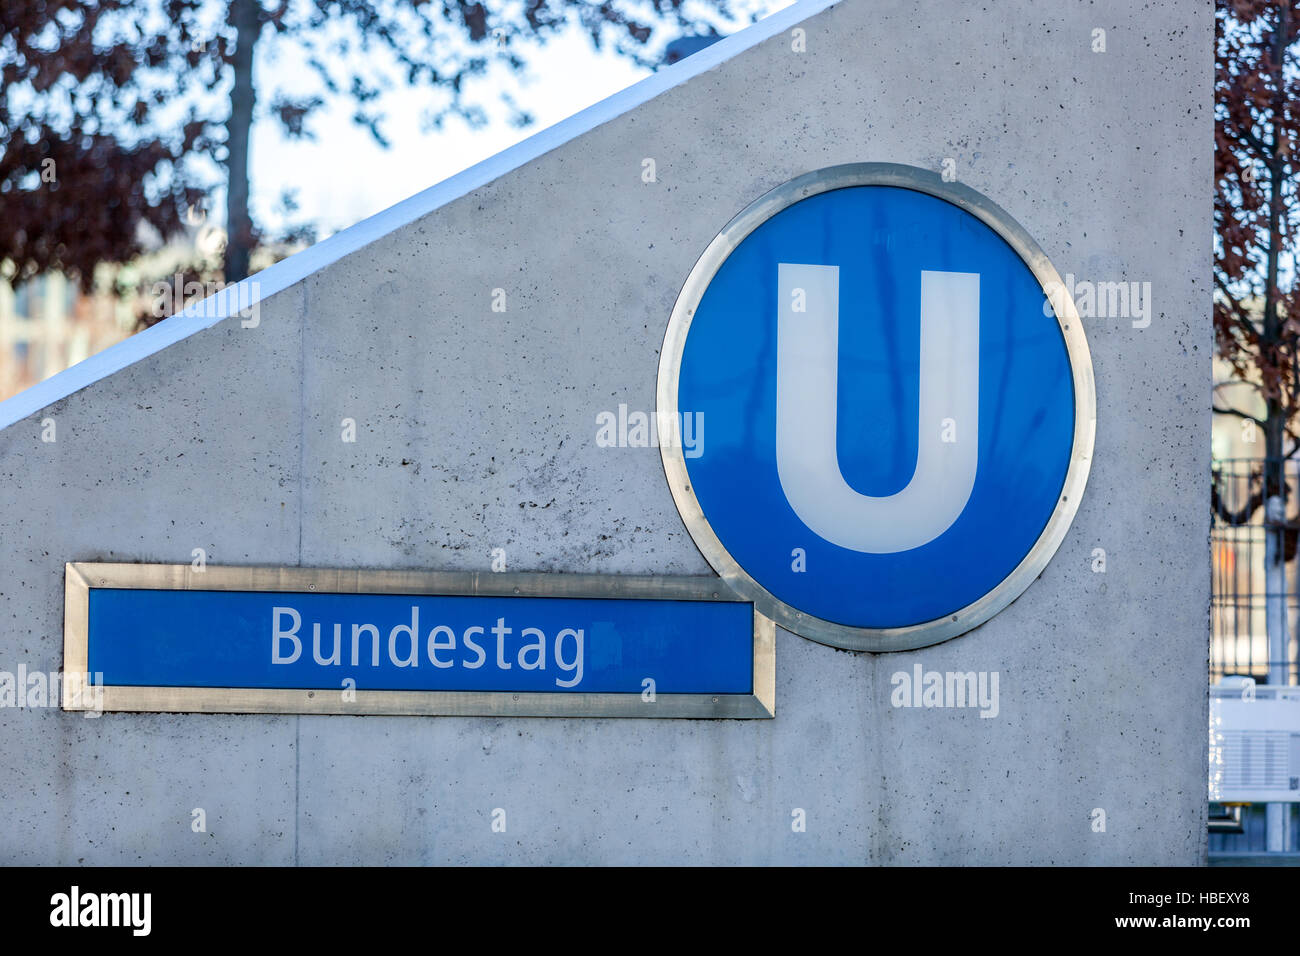 Bundestag underground station sign in Berlin,Germany Stock Photo